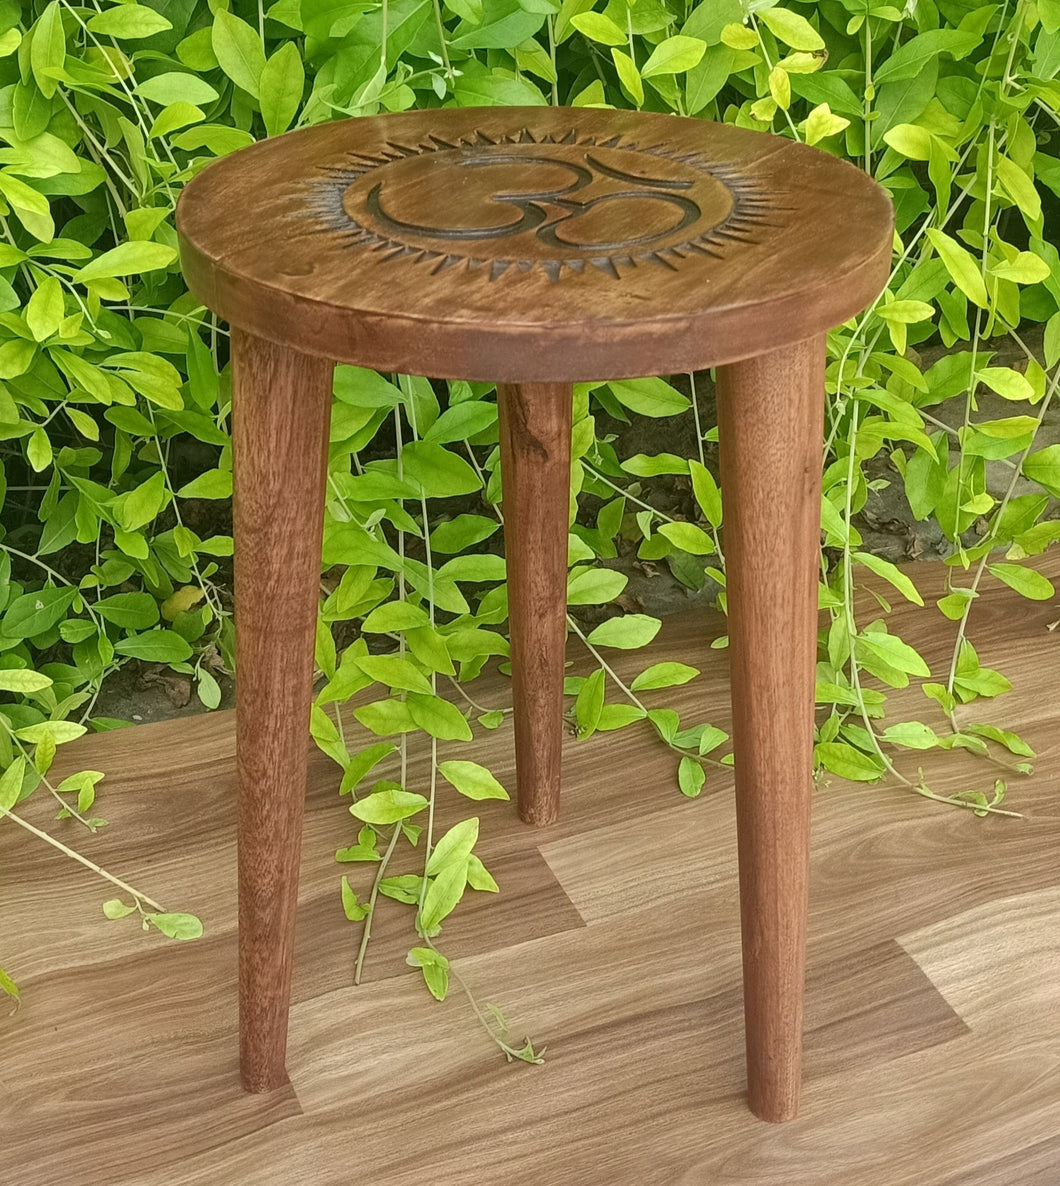 Round Side Table Om symbol 30cm diameter